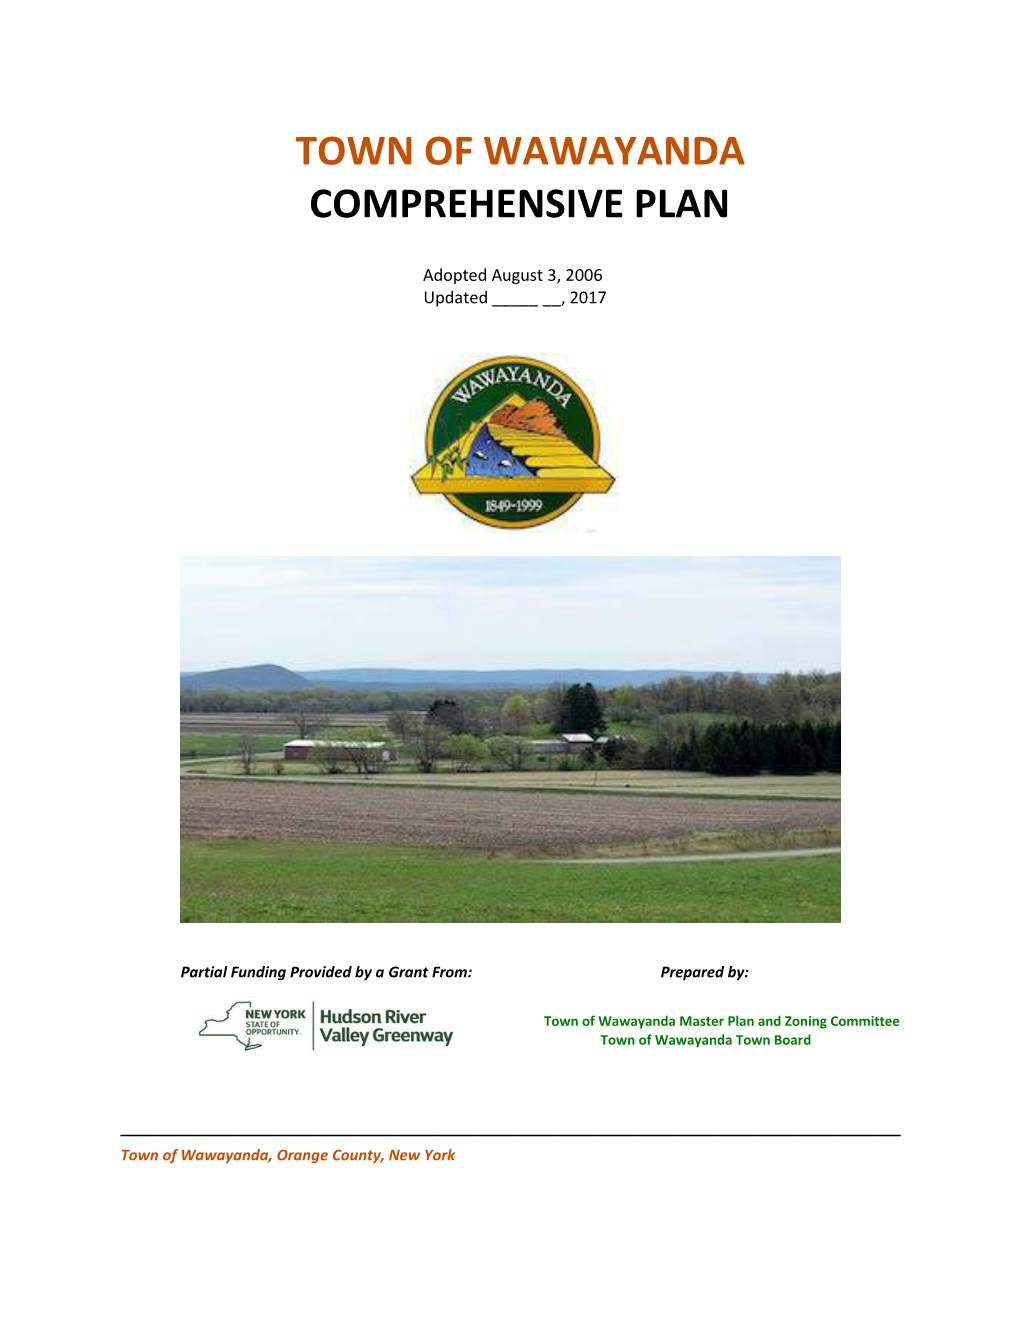 Town of Wawayanda Comprehensive Plan